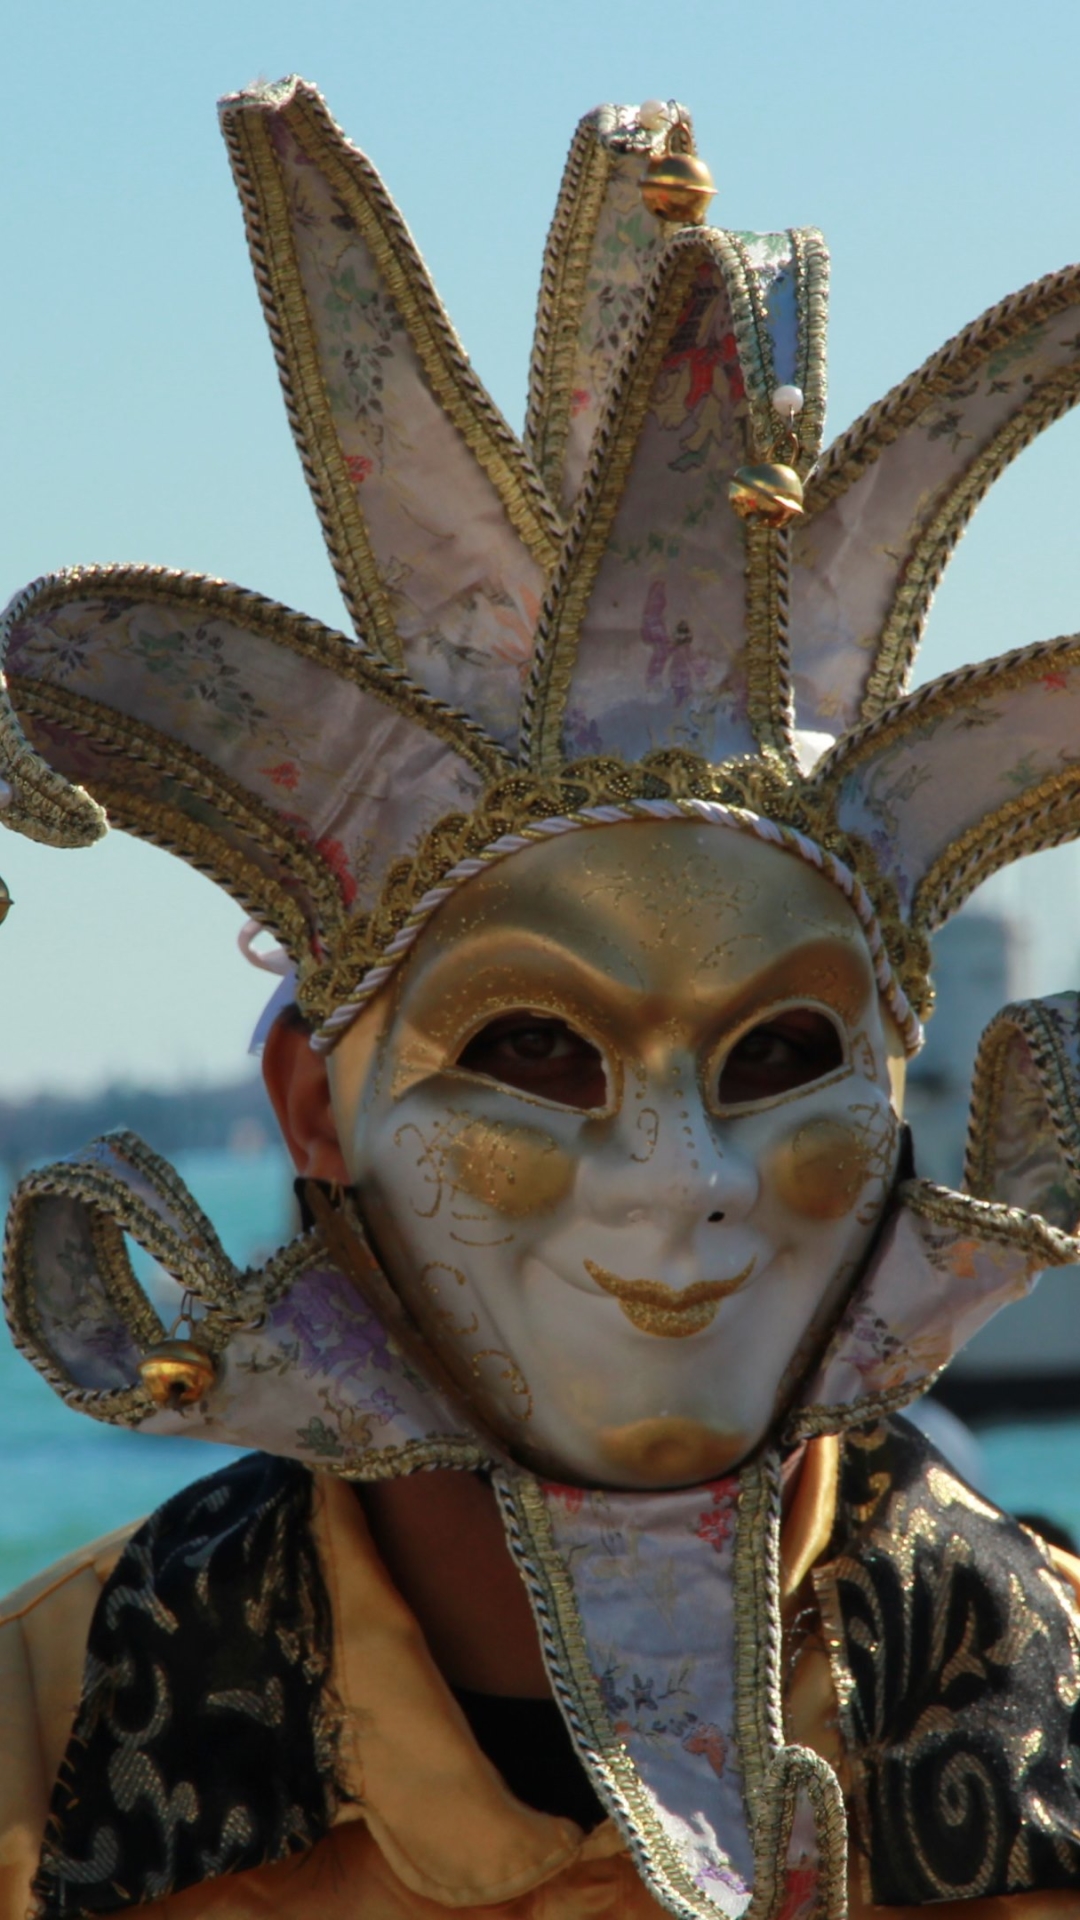 Masks at Venice Carnival by Vasile Pralea